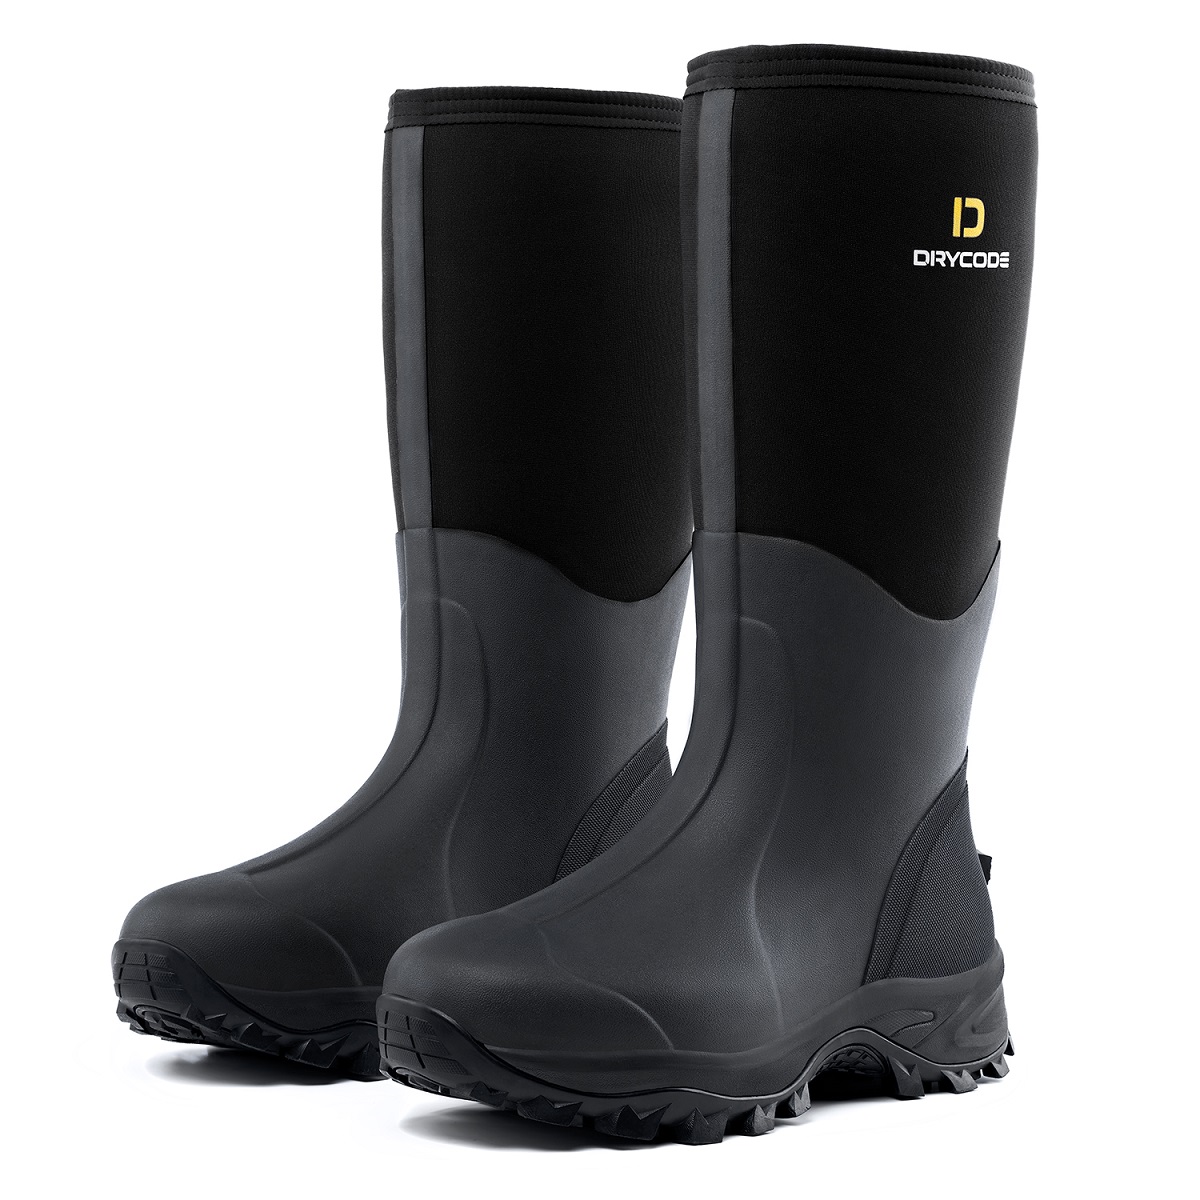 https://img-va.myshopline.com/image/store/1691119653301/DRYCODE-Rubber-Boots-for-Men-and-Women-(Black),-6mm-Warm-Neoprene-(3).jpeg?w=1200&h=1200